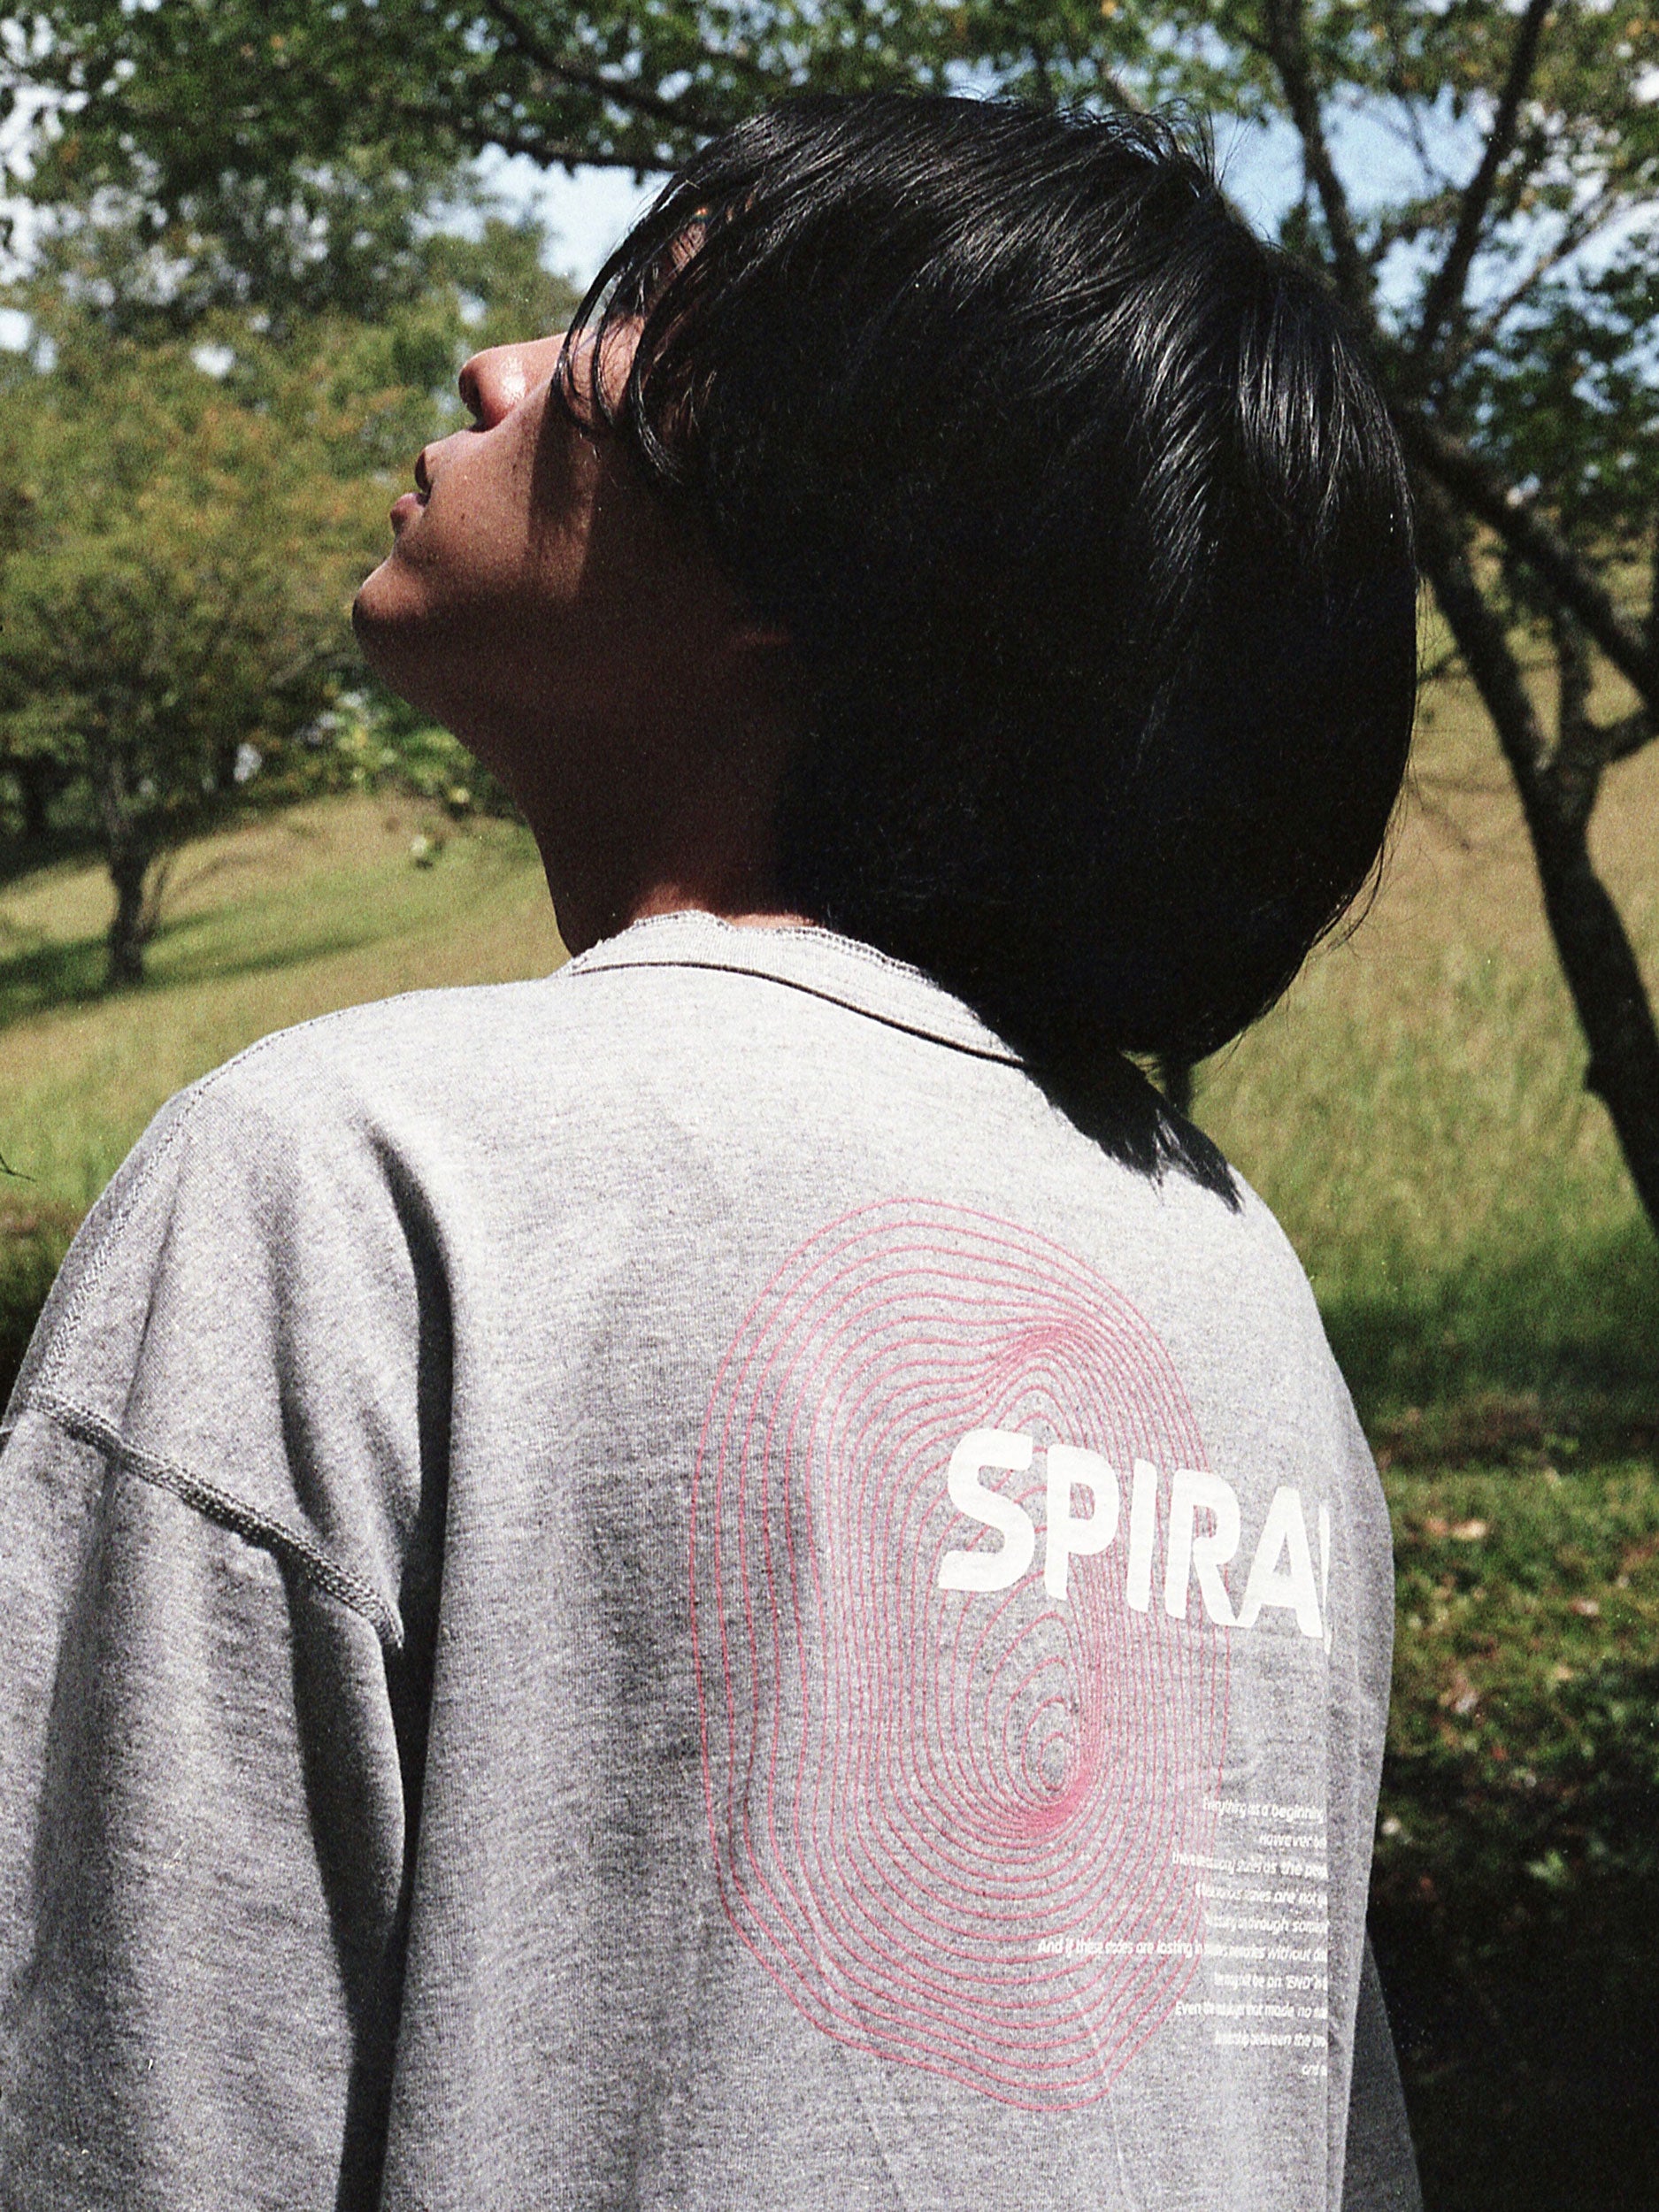 Spiral Big Tshirt/GRAY